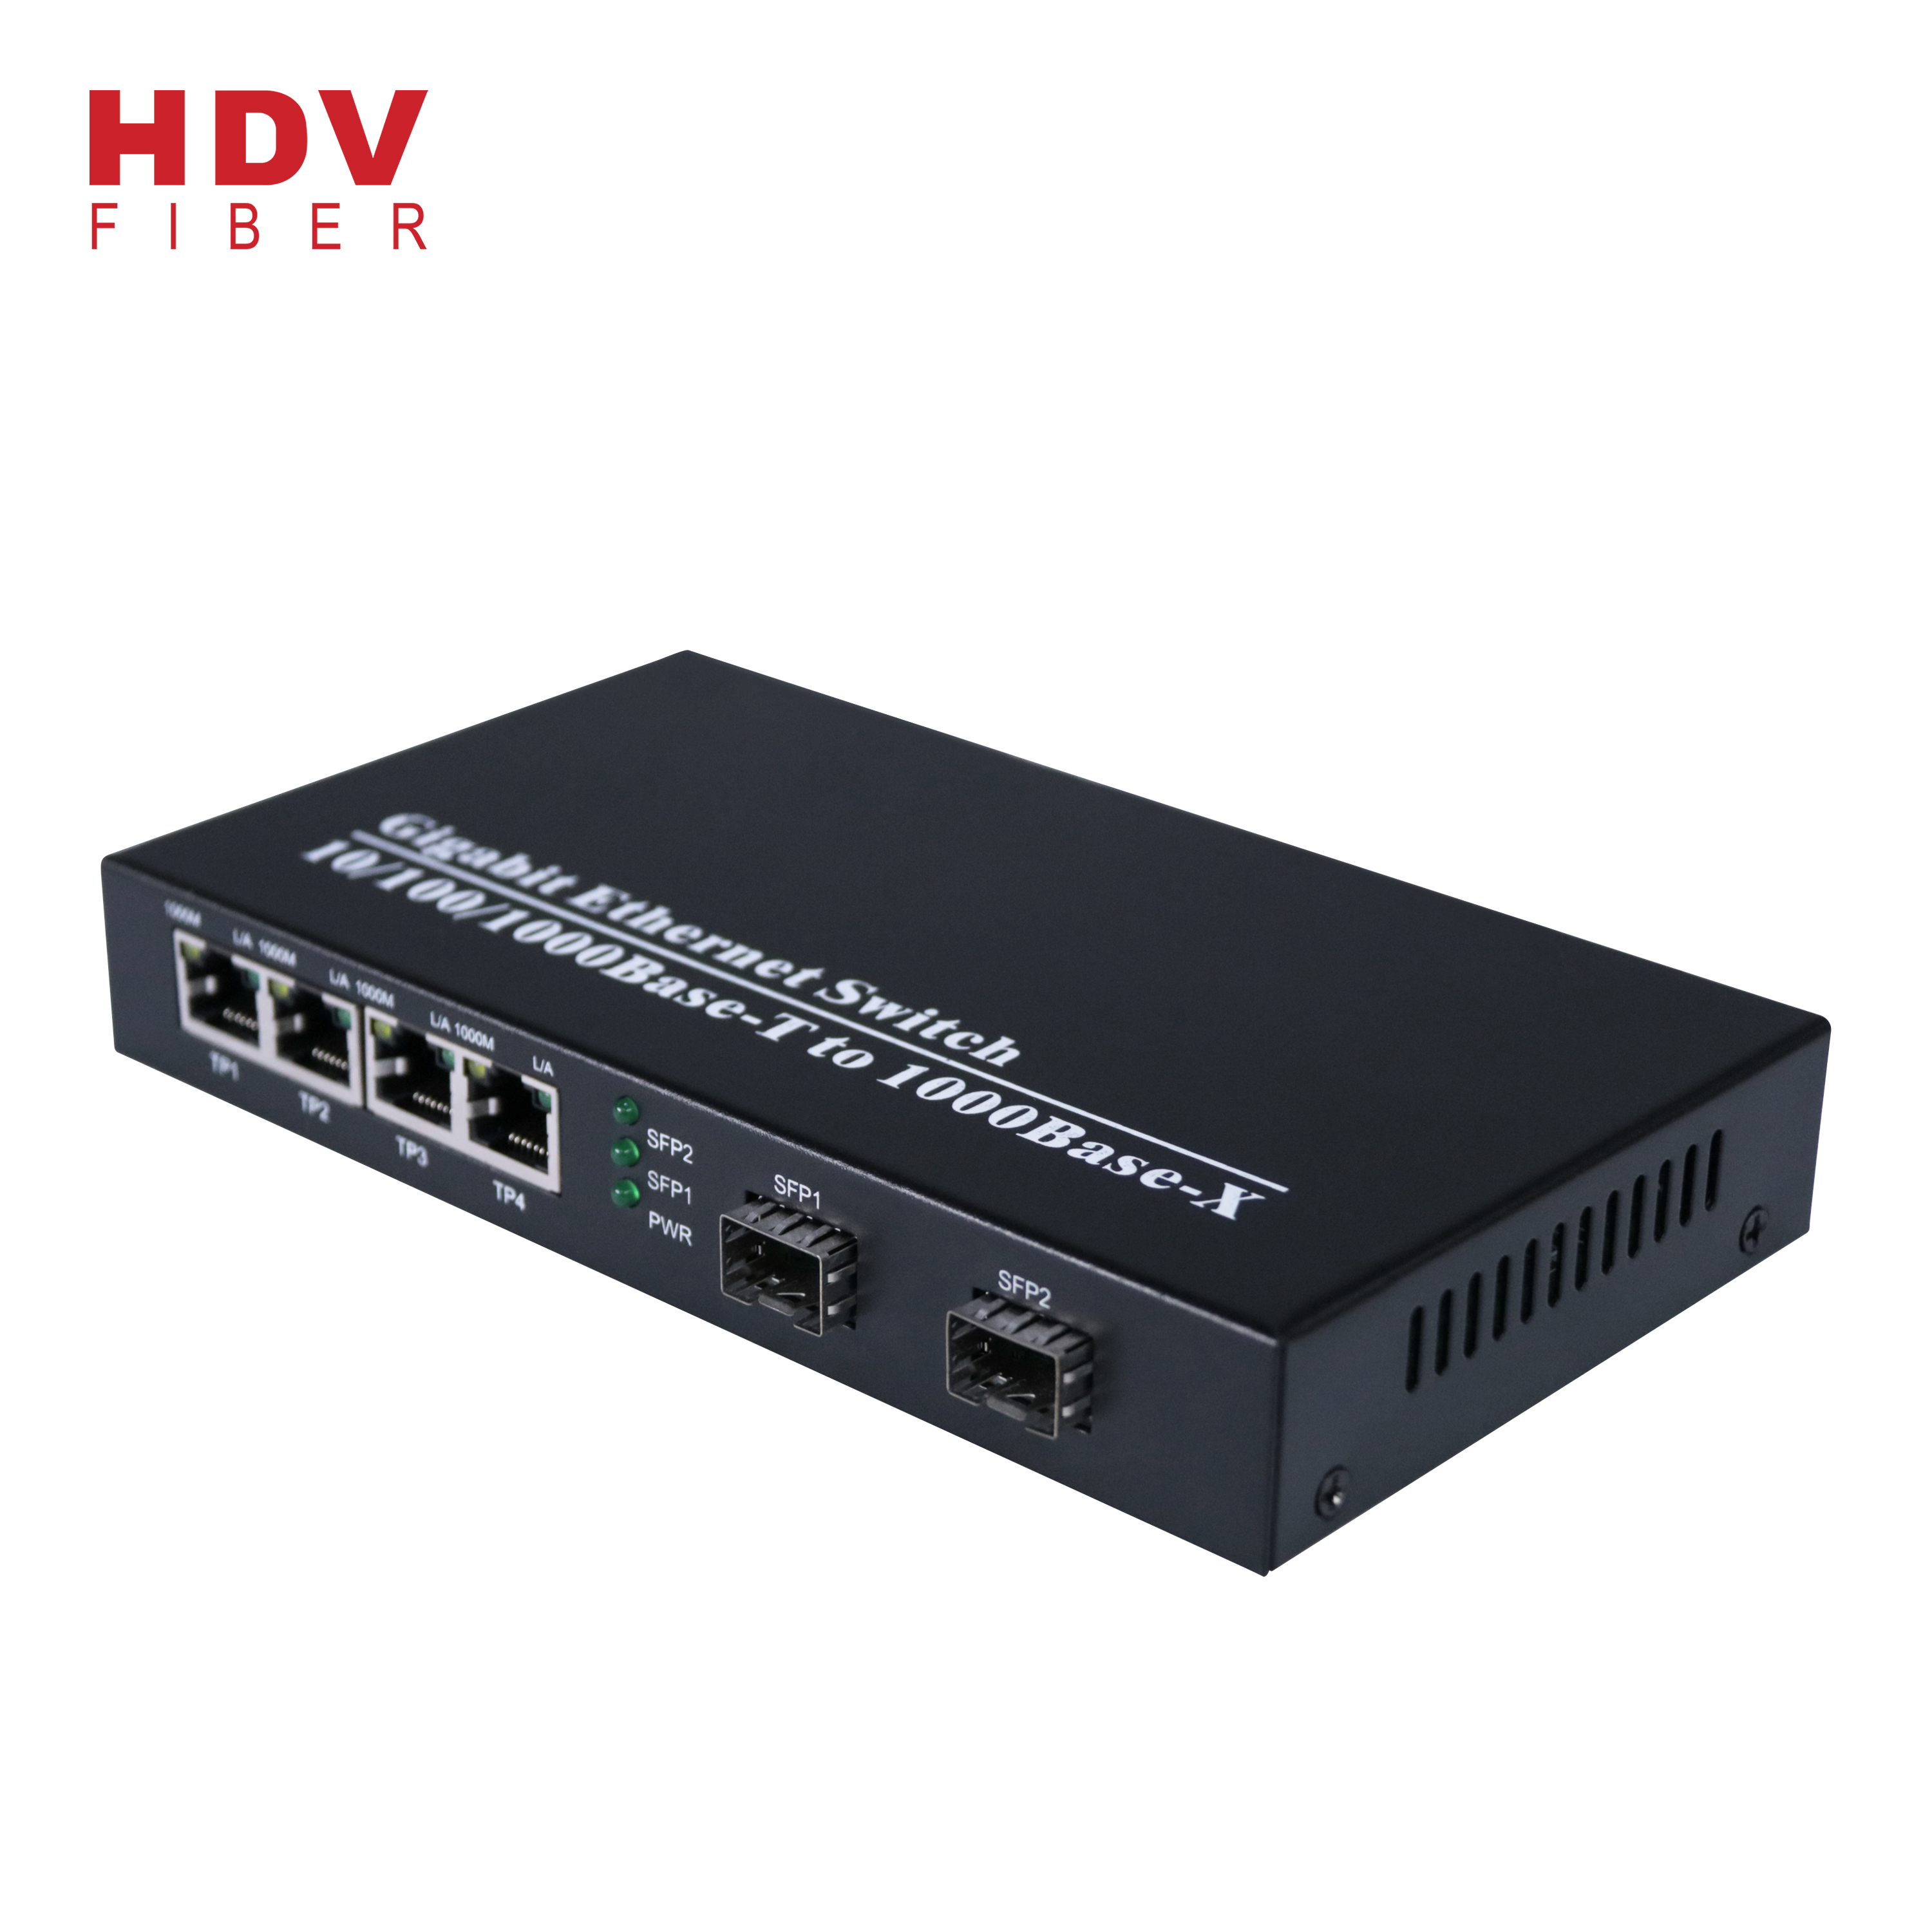 Sfp Ethernet Switch - 4 Port Gigabit Ethernet Switch and 2 SFP Ports 1000M fiber optic transceiver switch – HDV